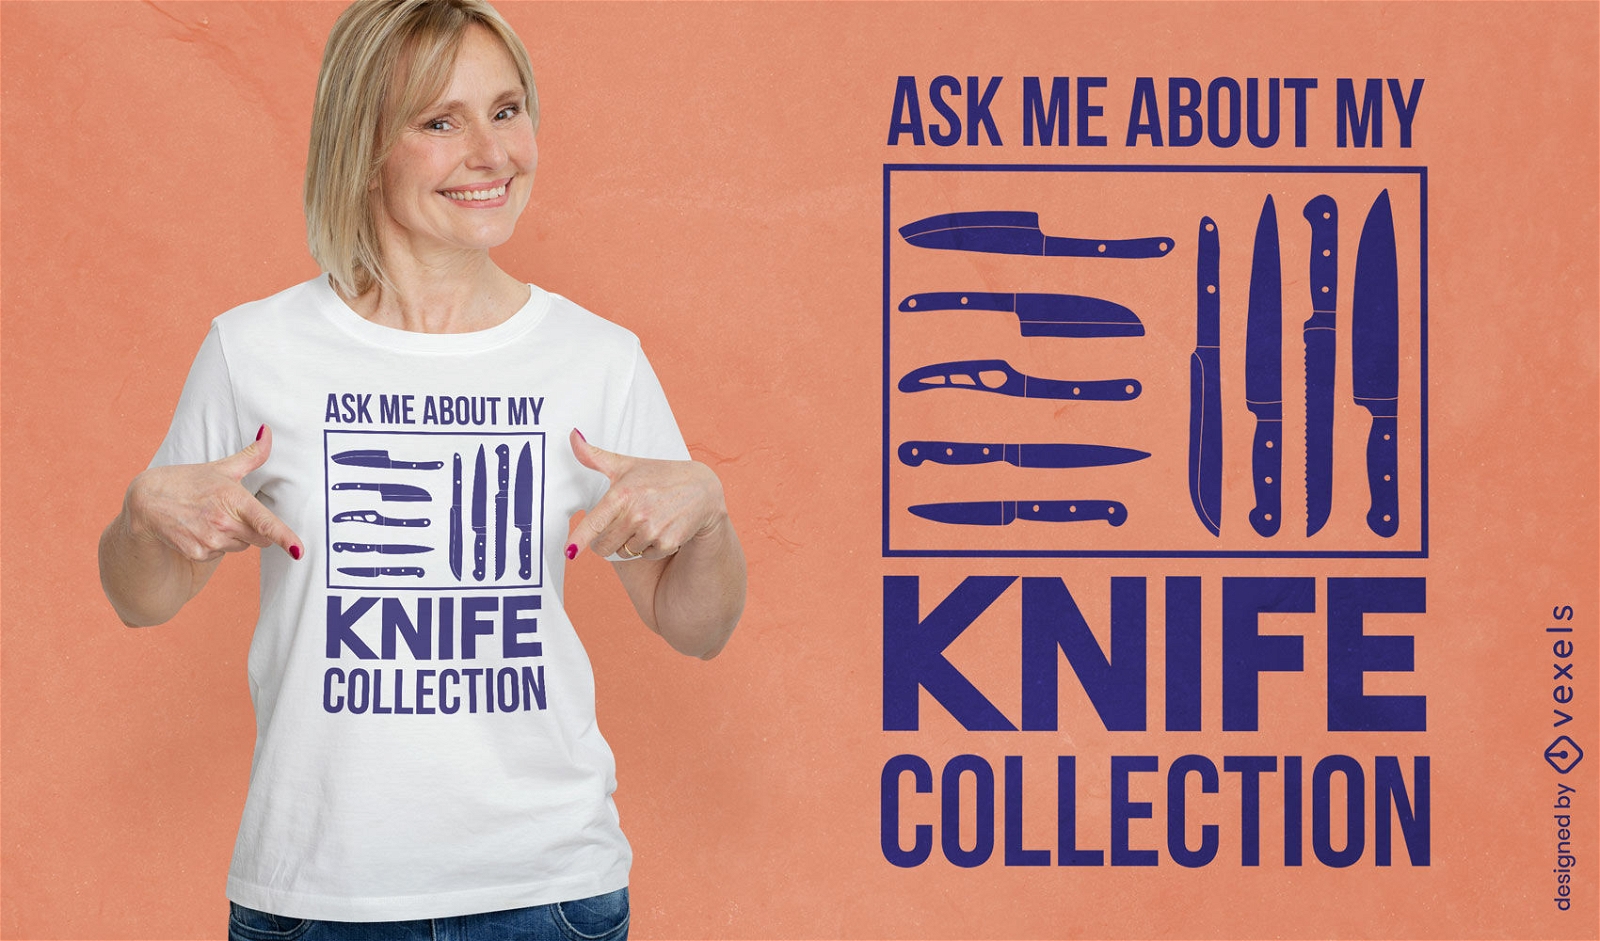 Dise?o de camiseta de herramientas de cocina de cuchillos.